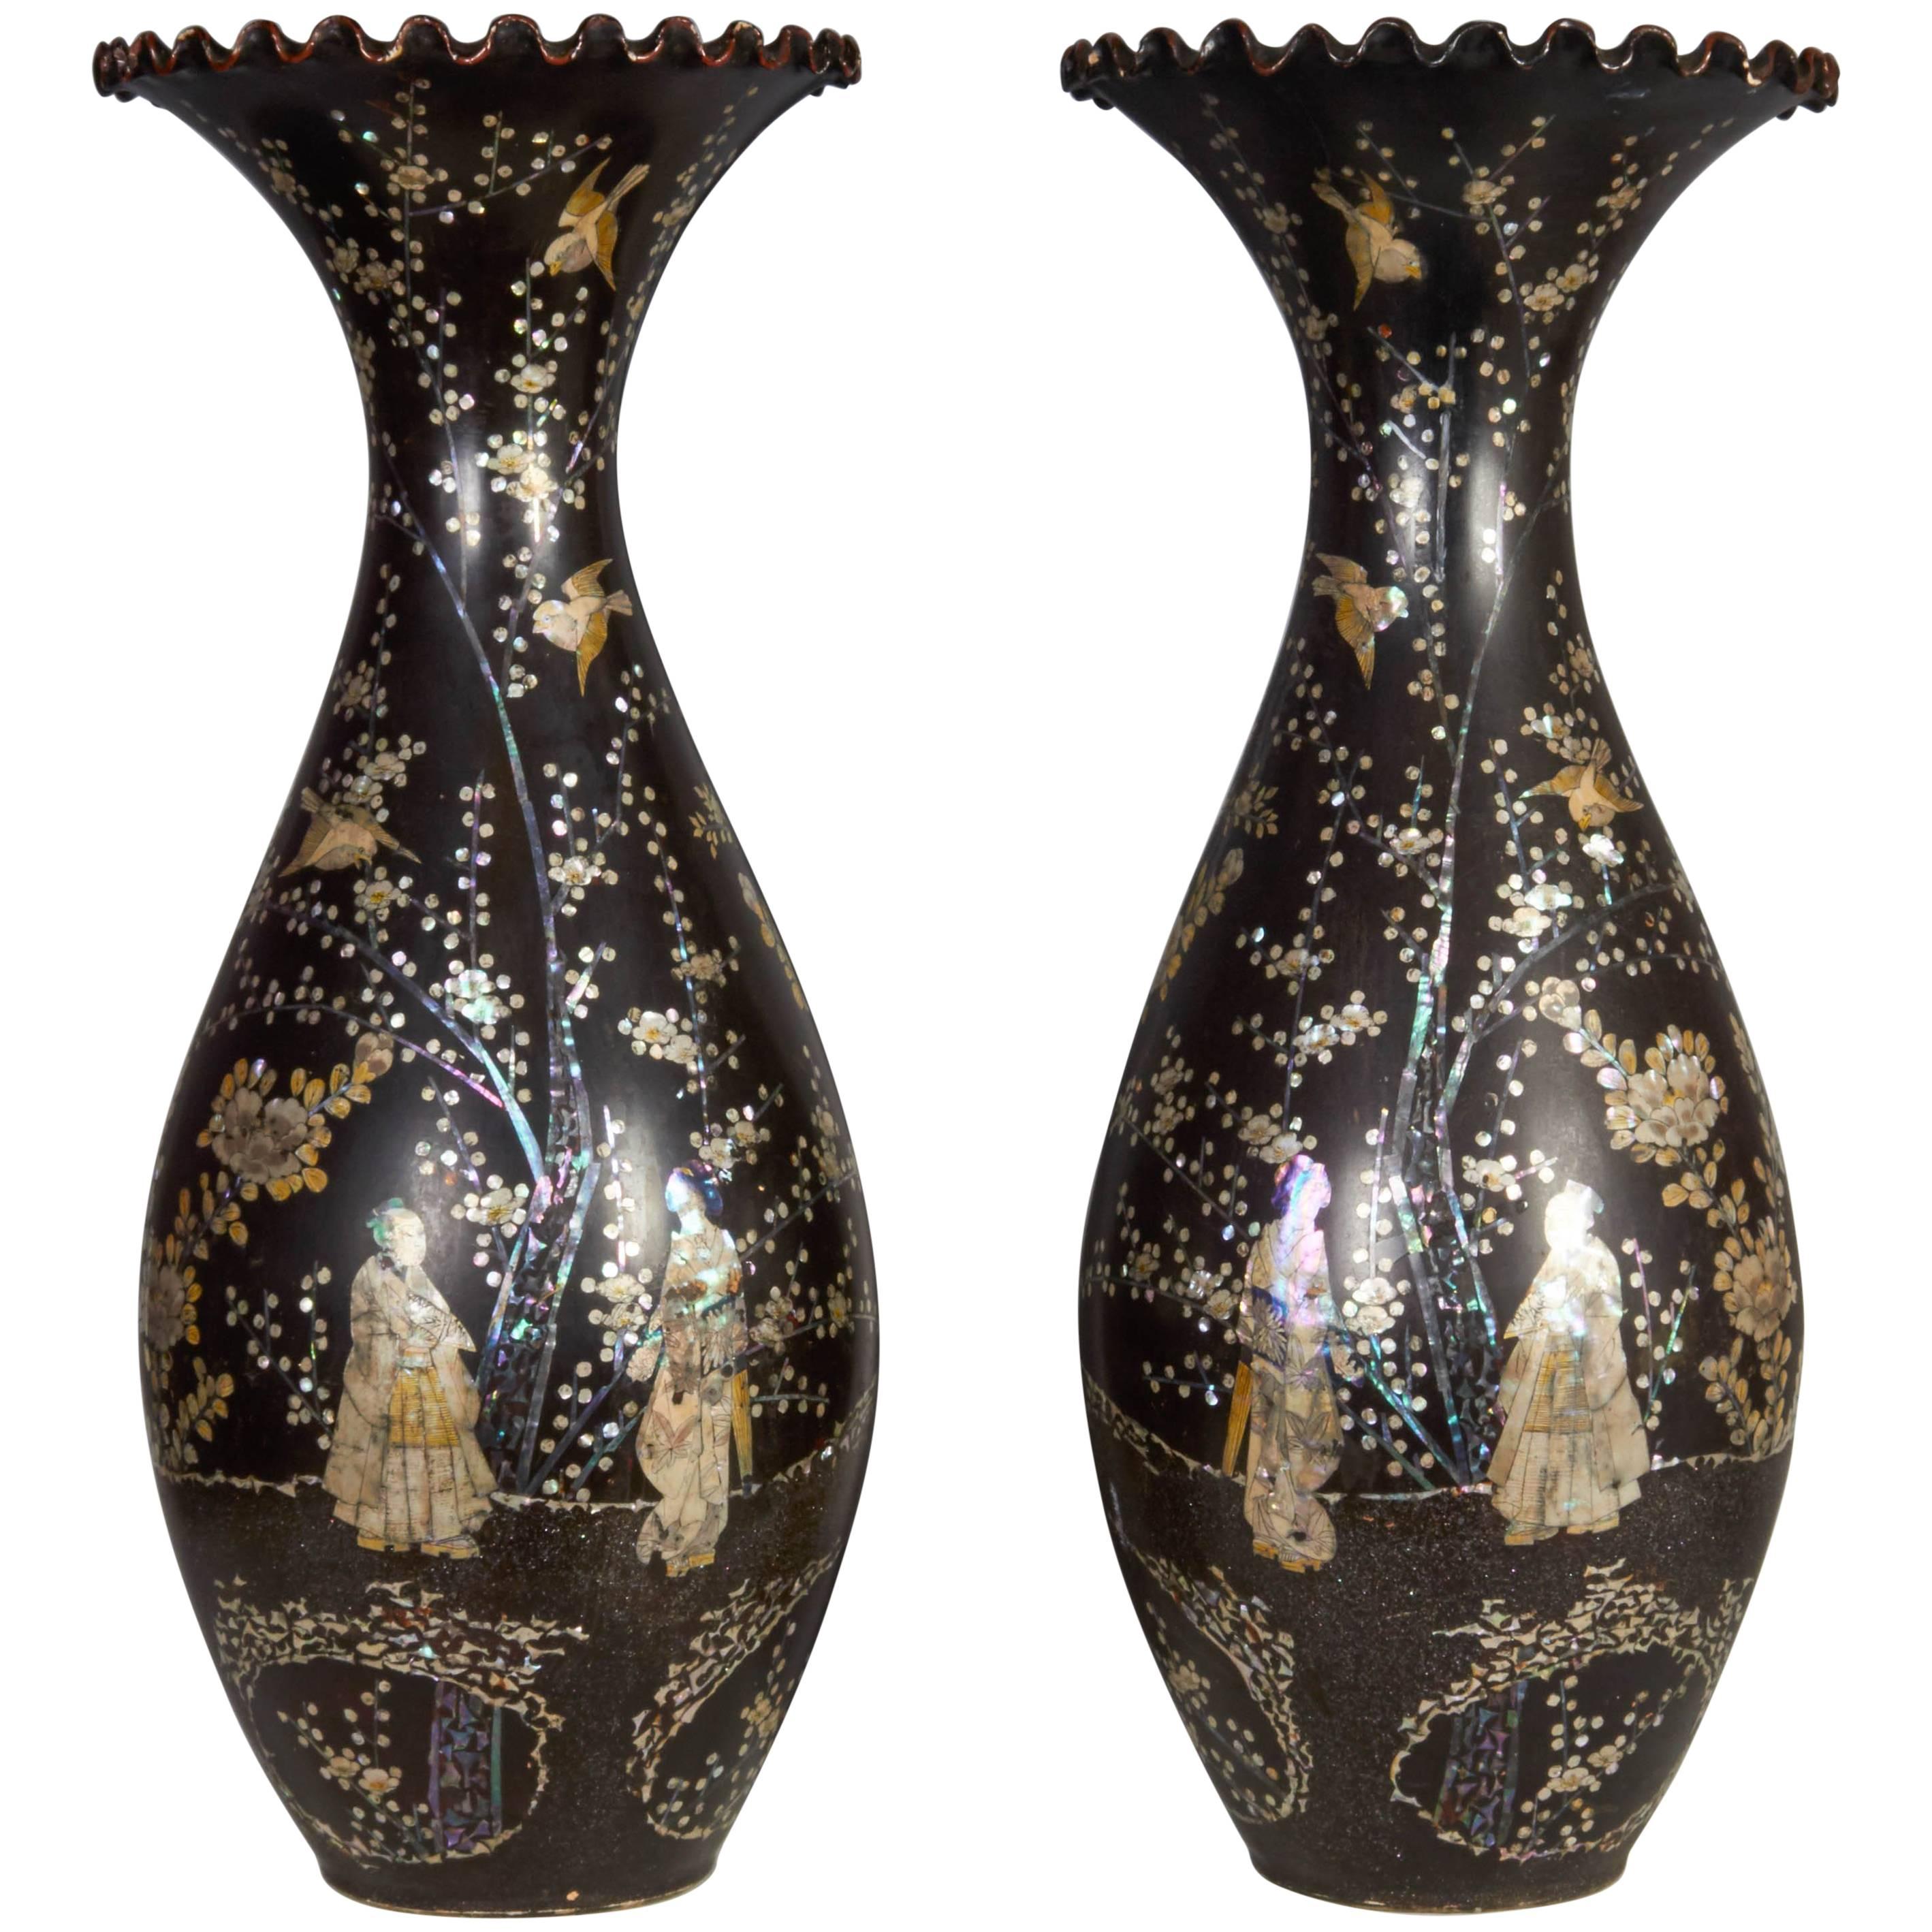 Unusual Pair of Mother of Pearl Inlaid Black Porcelain Japanese Vases